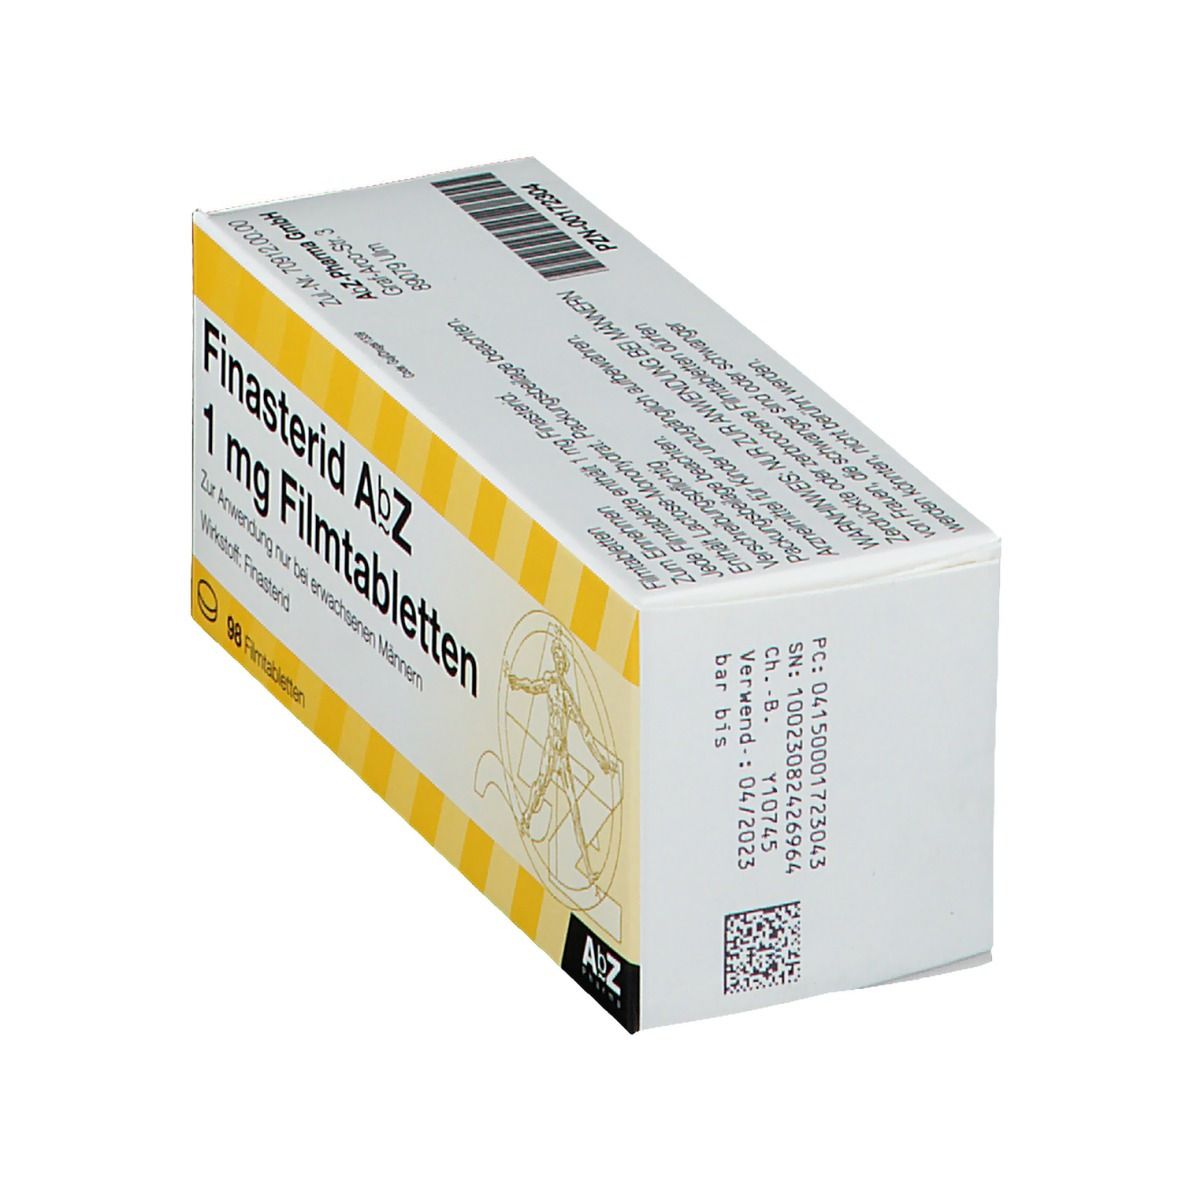 Finasterid AbZ 1 mg